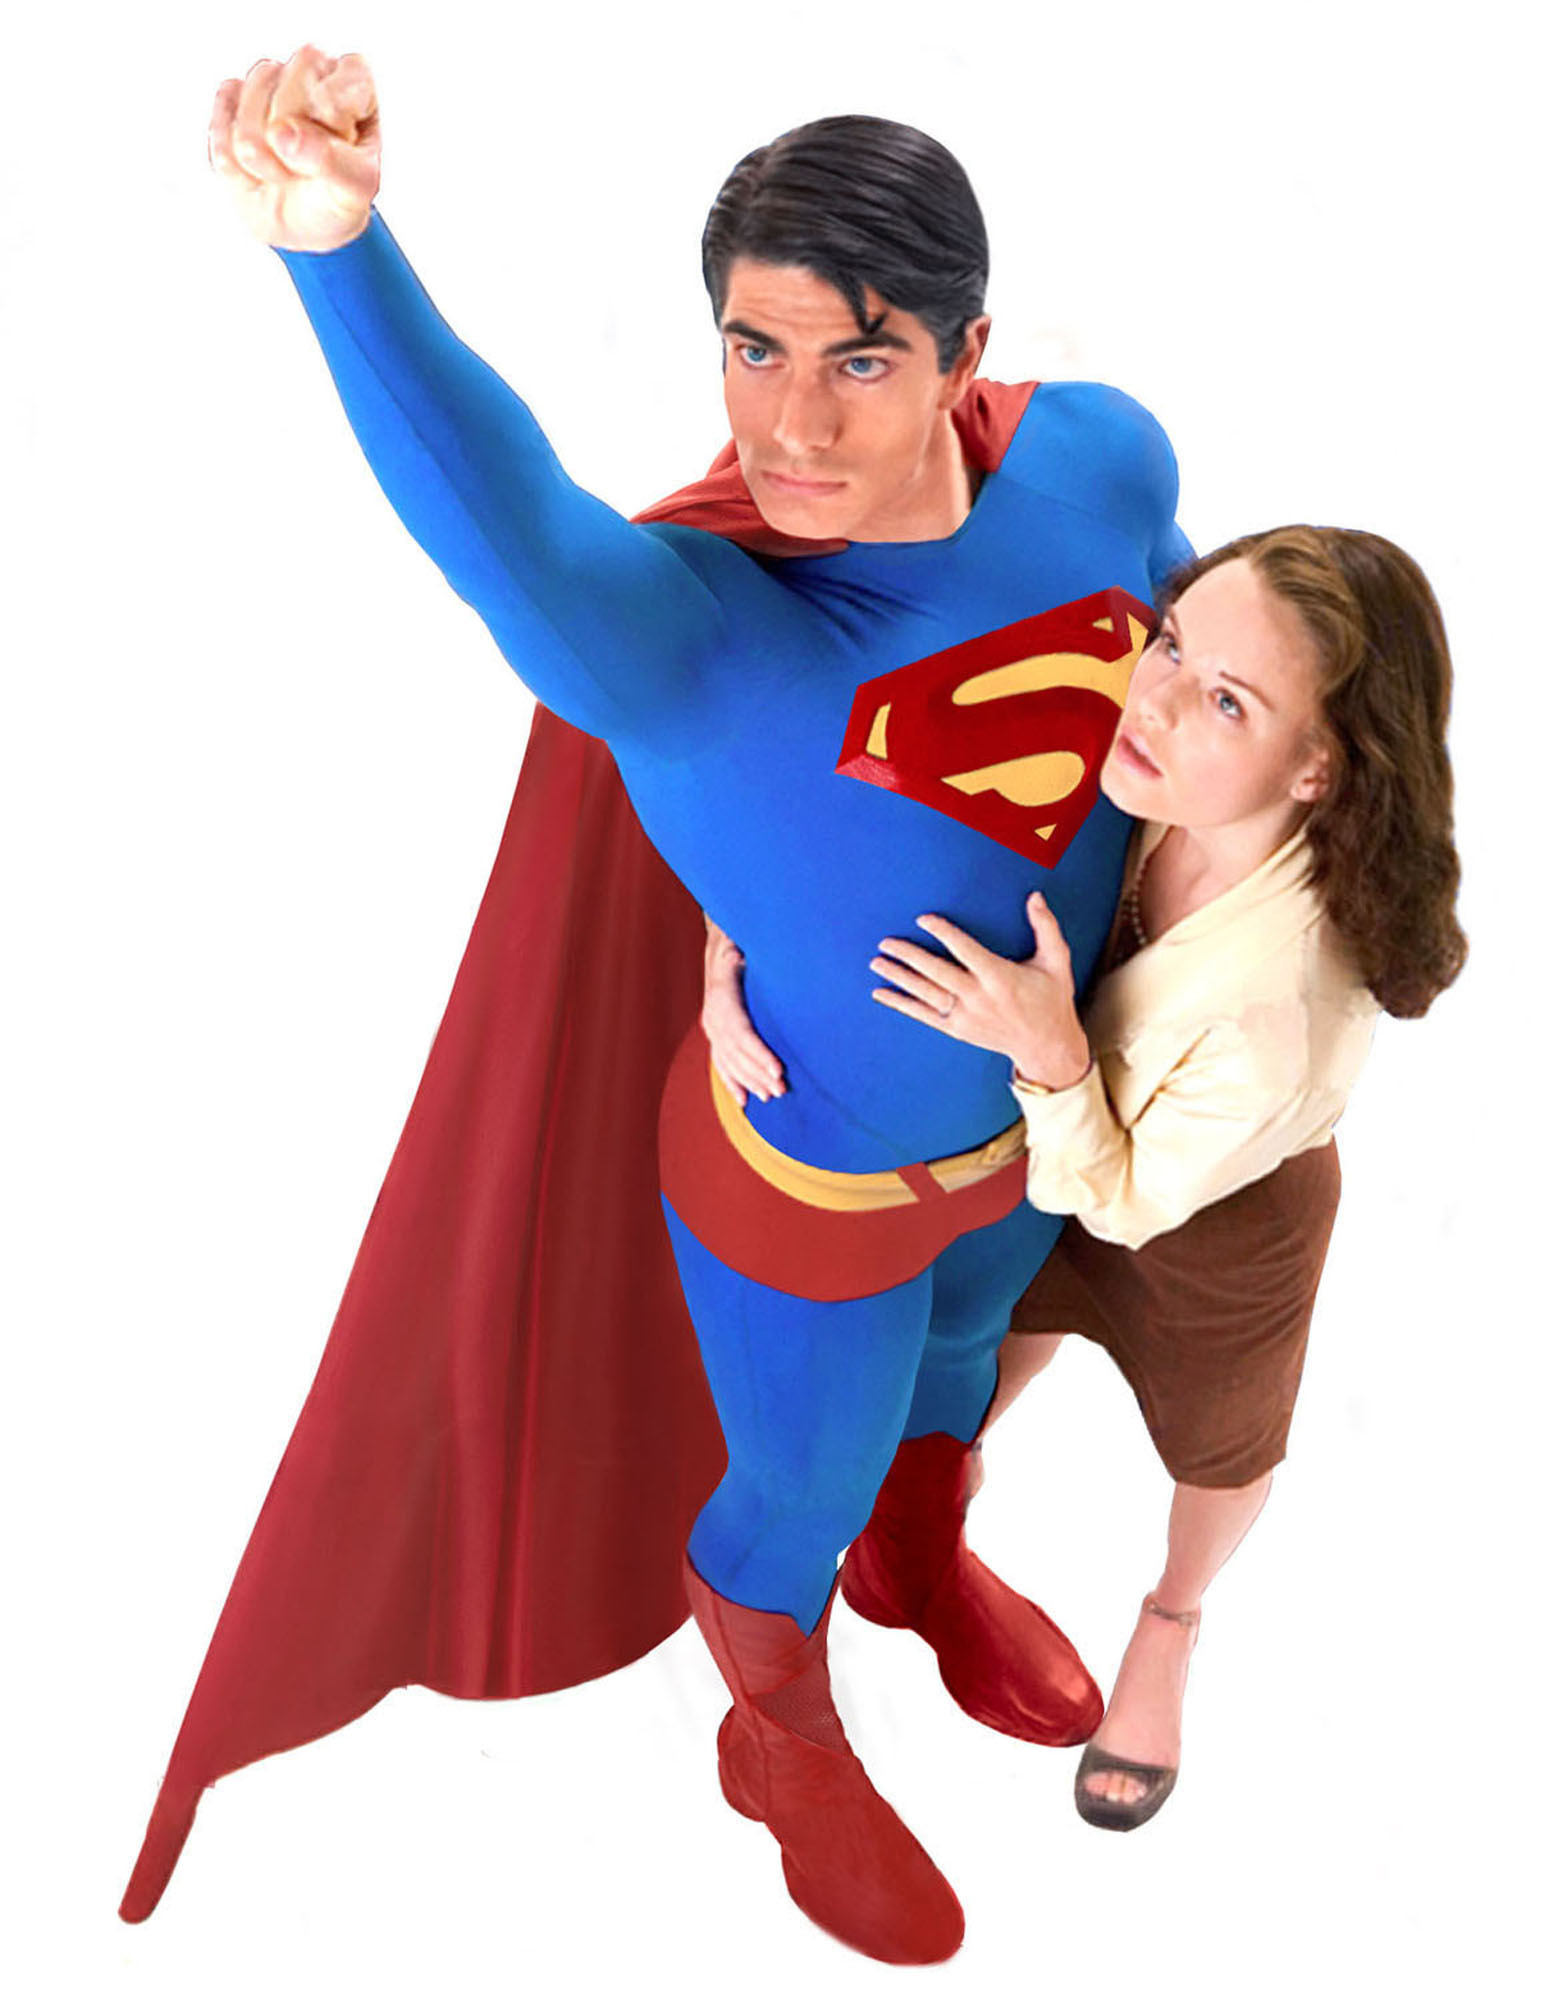 Superman Returns promoshoot - Superman Returns Photo (8696663) - Fanpop